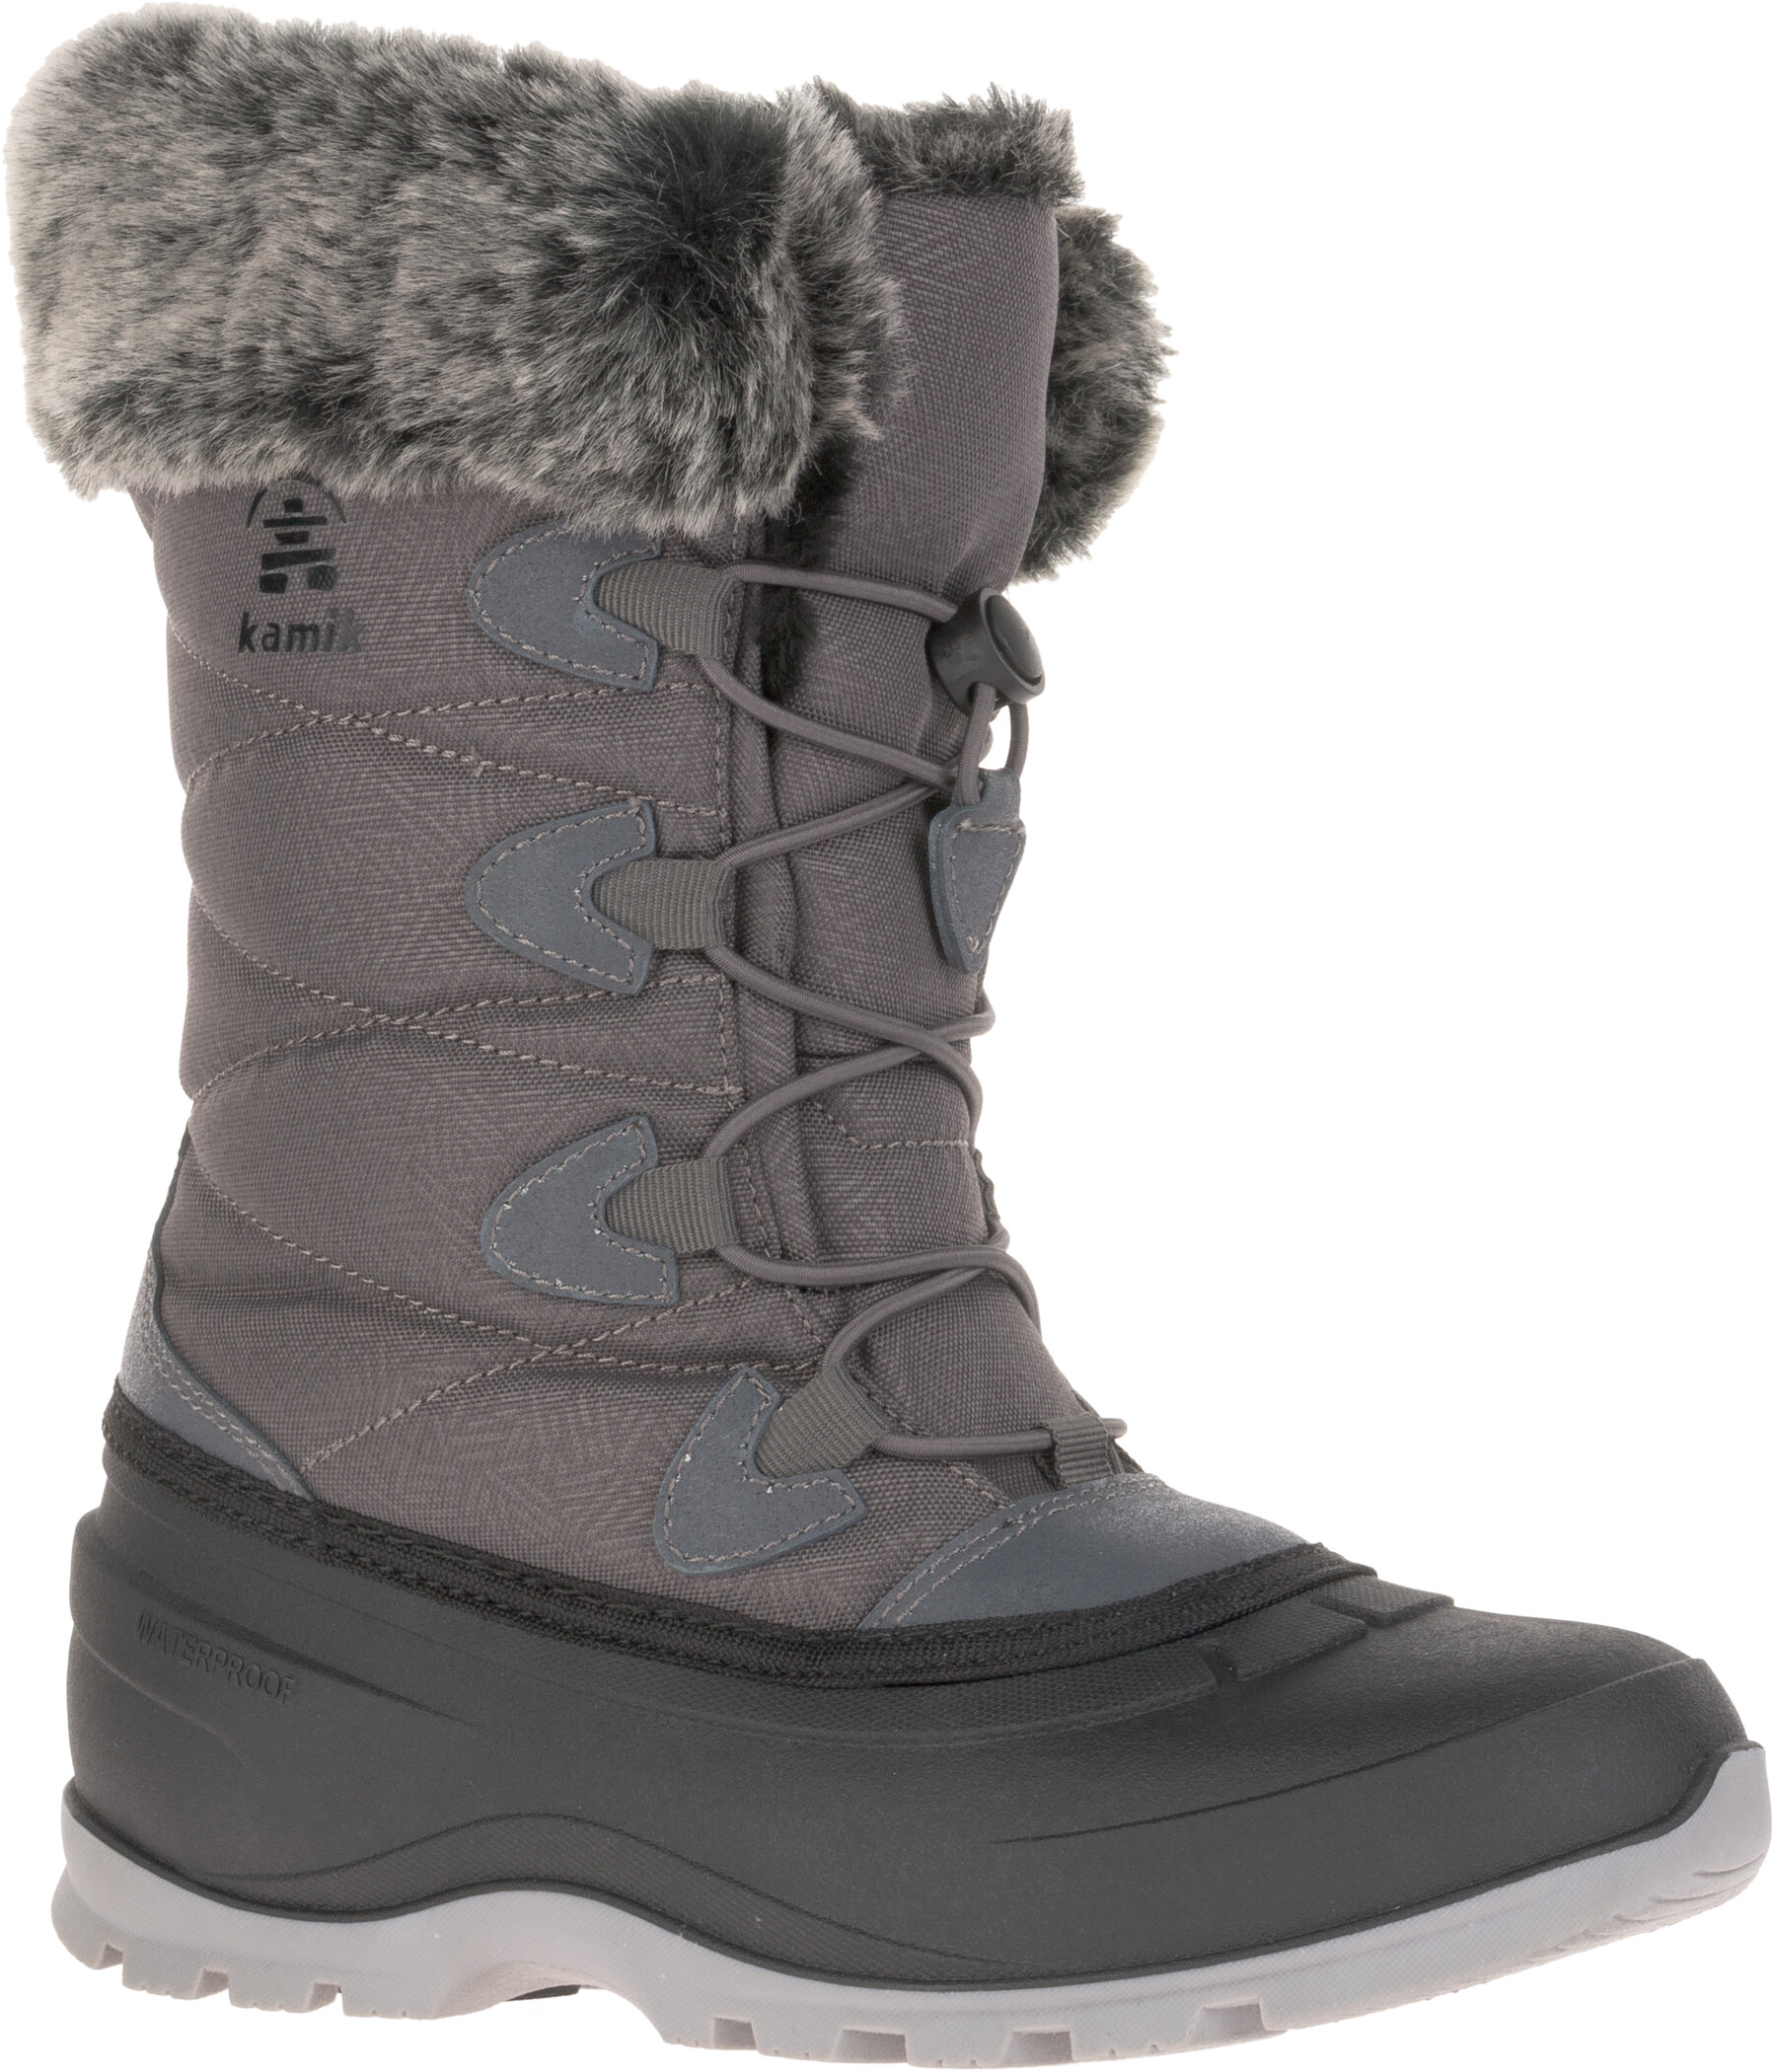 & Sneeuwlaarzen Schoenen damesschoenen Laarzen Regen Black Winter Boots 